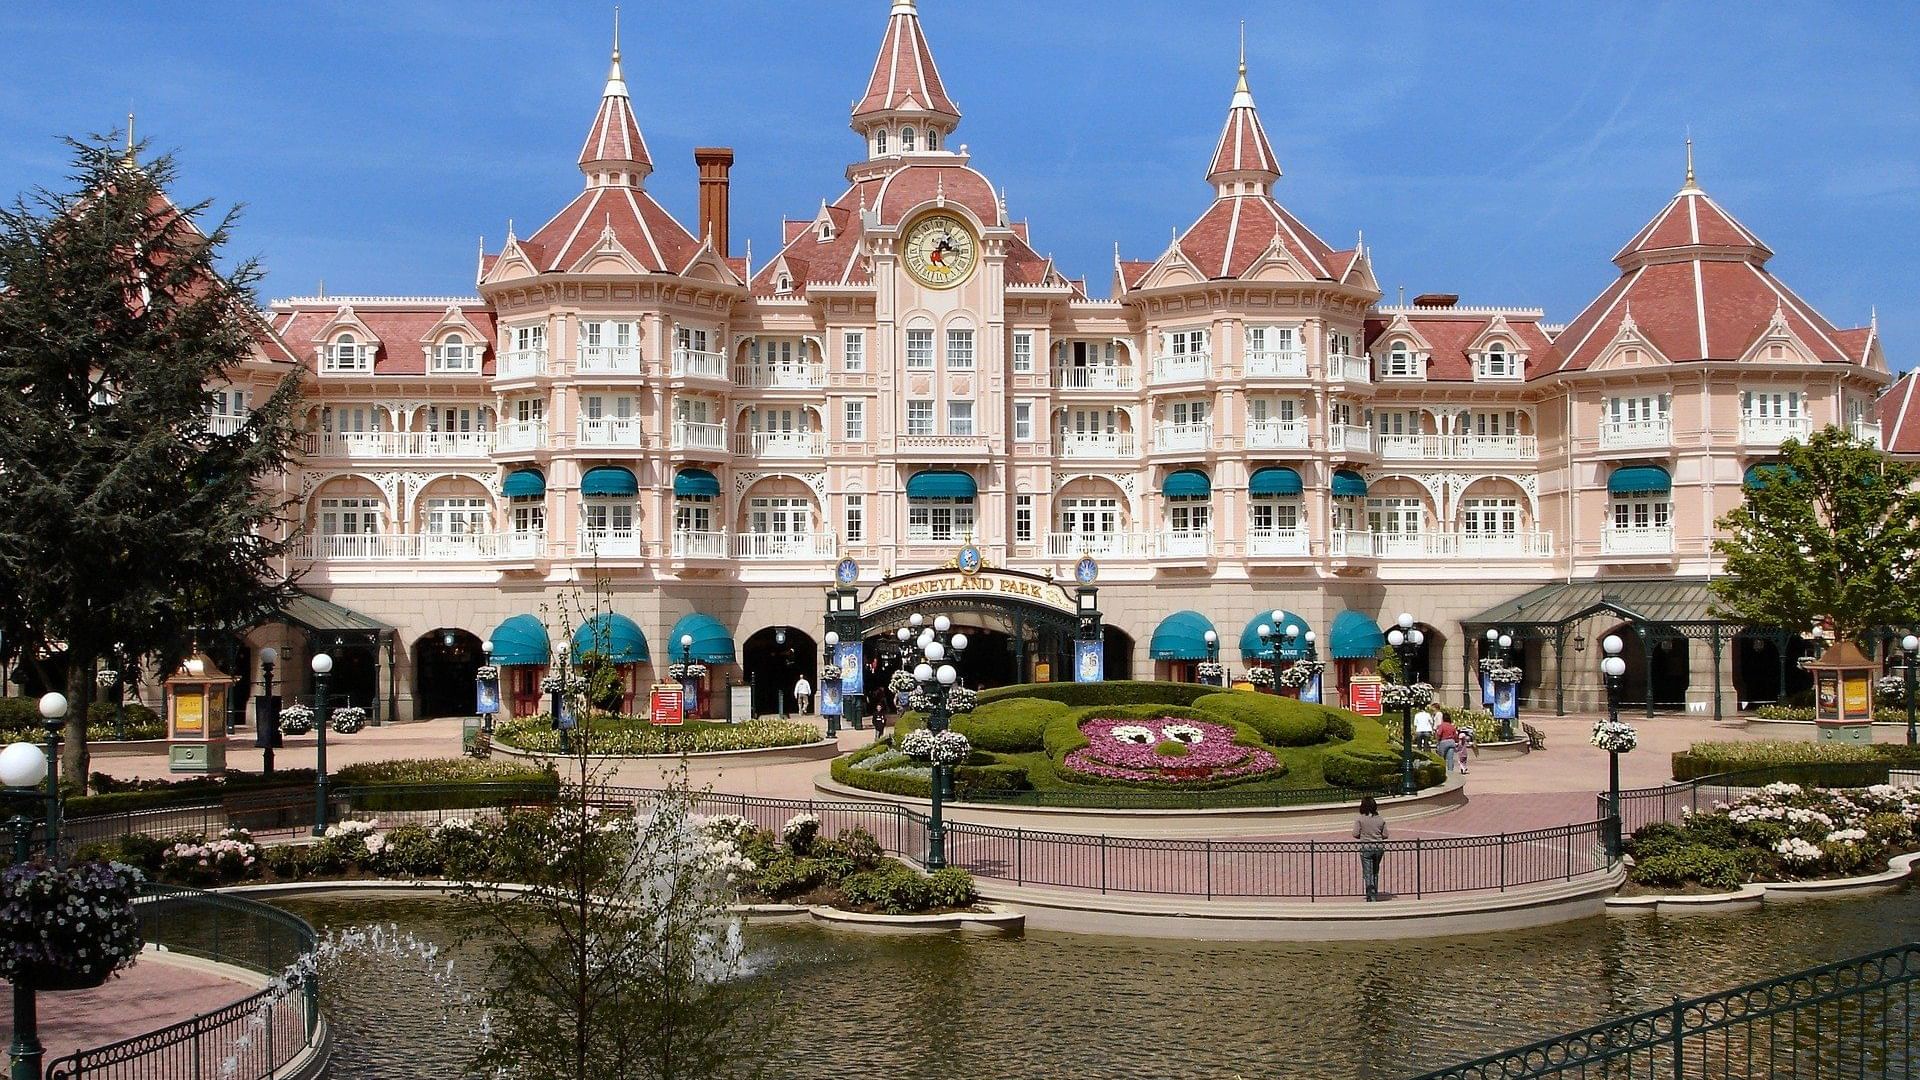 The exterior of Paris Disneyland near The Originals Hotels